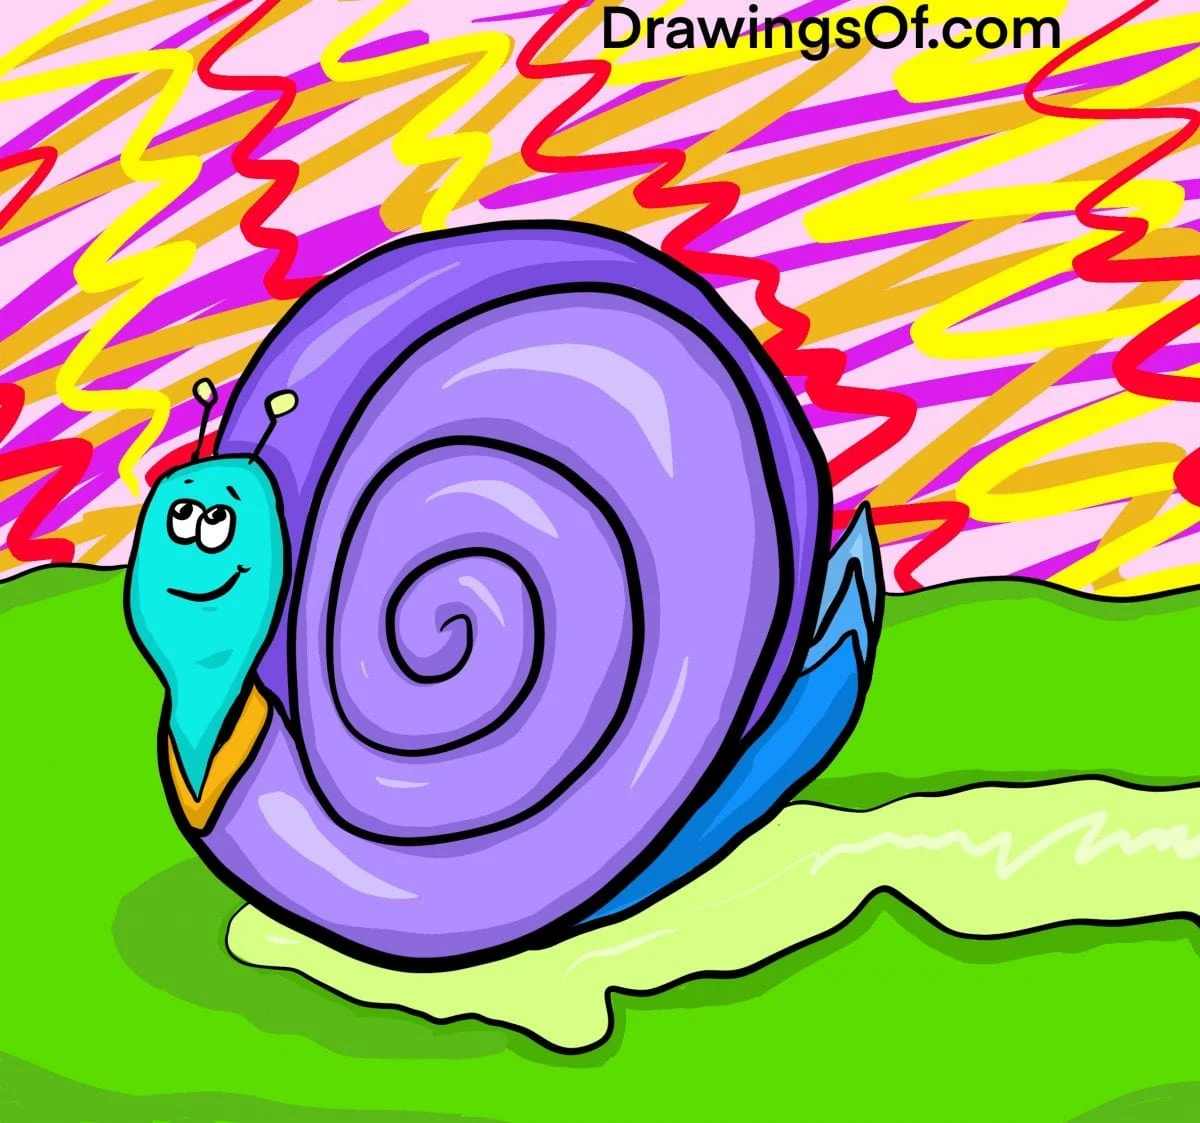 Snail drawing